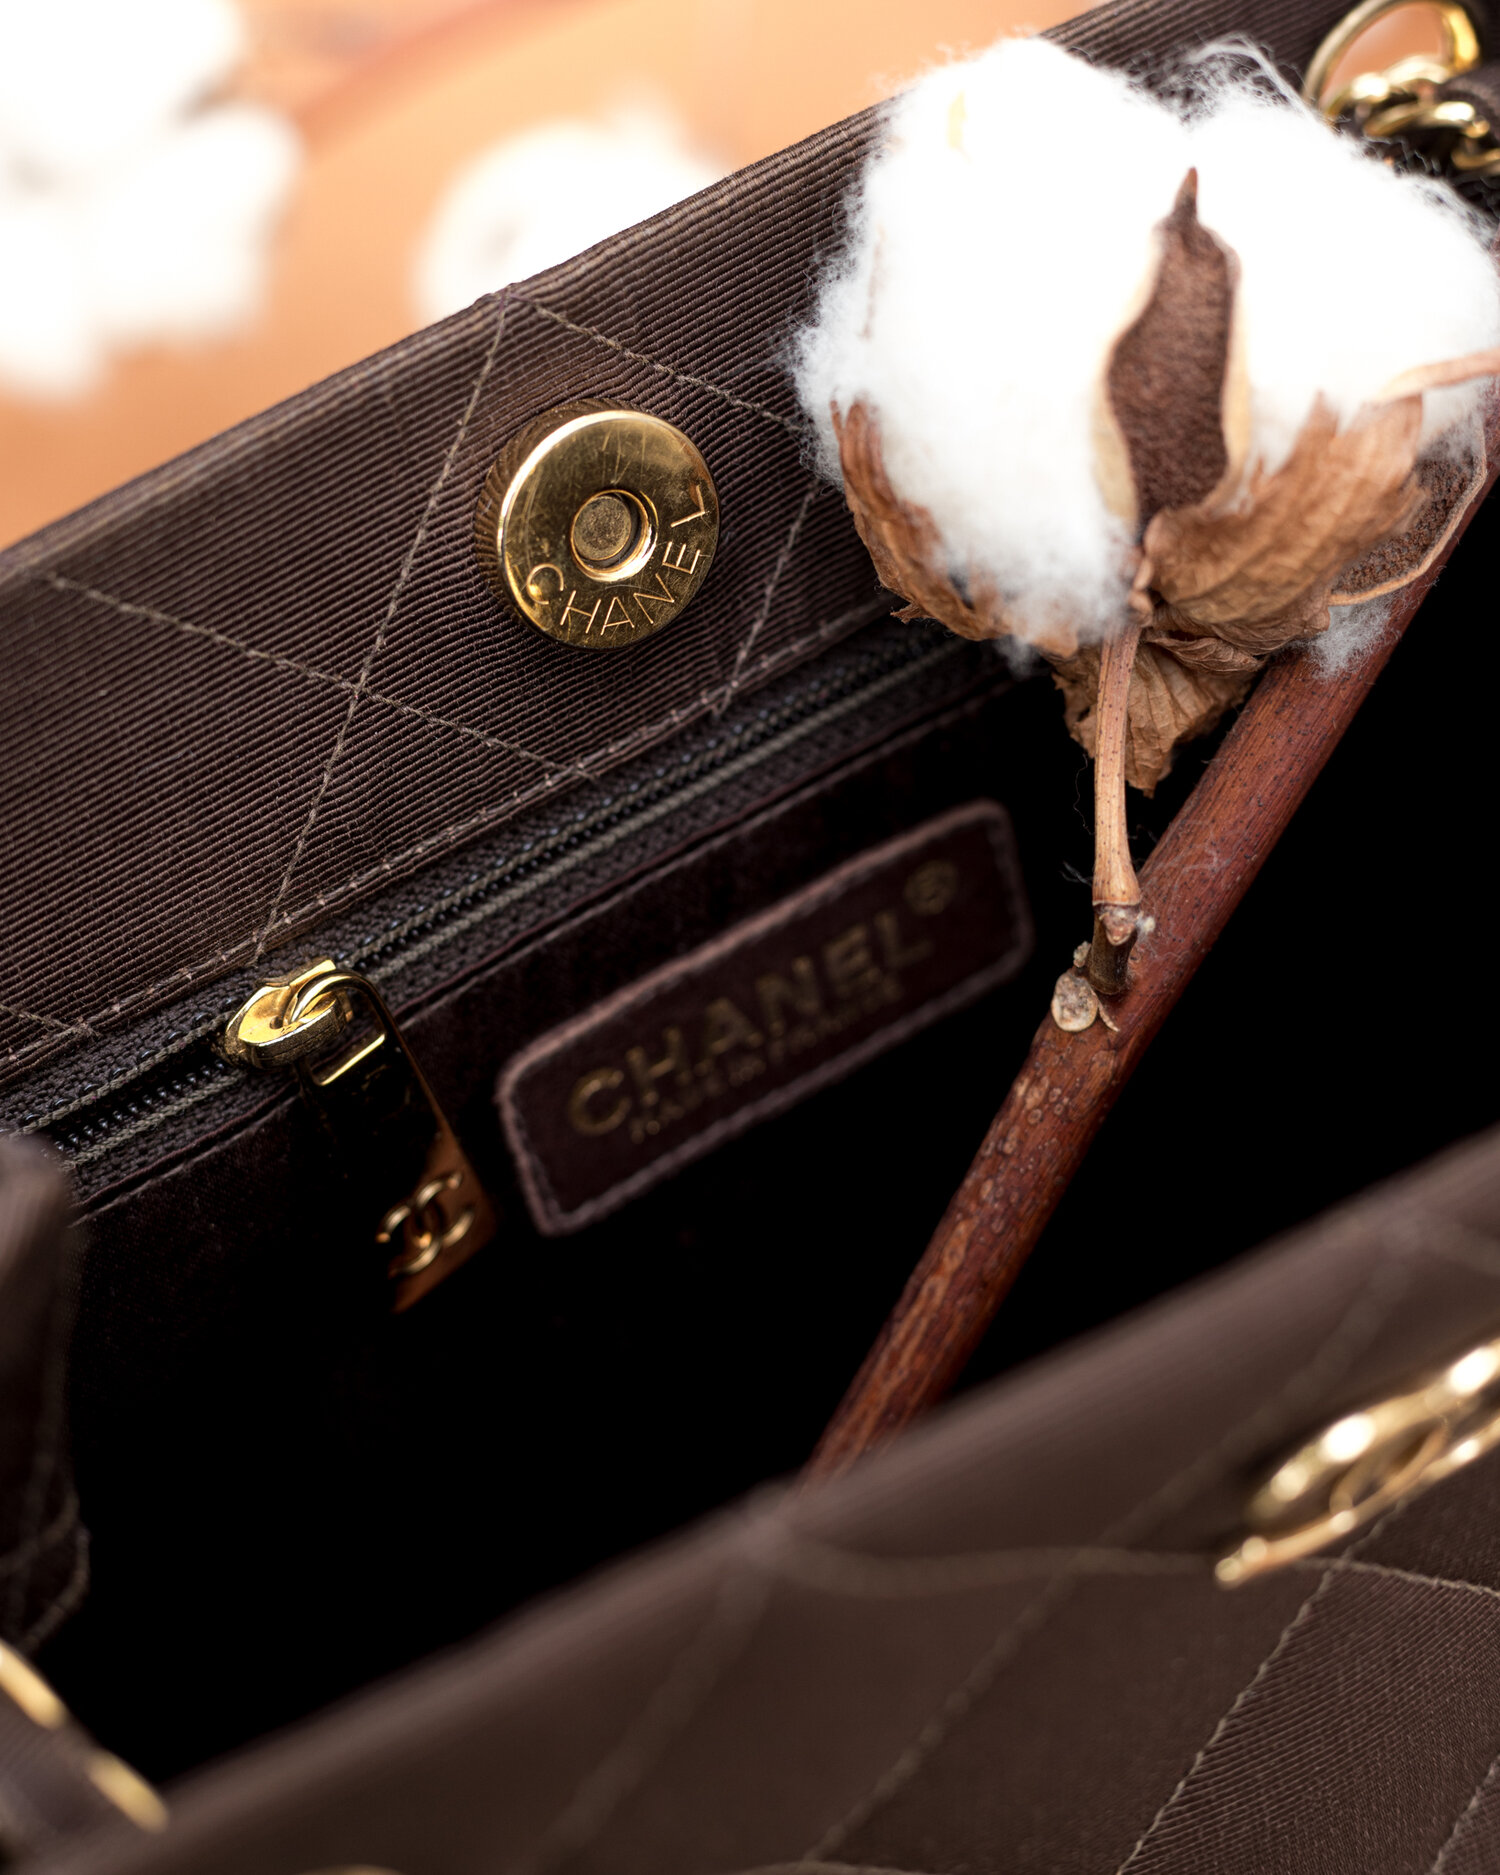 Chanel Brown Chevron Leather Medium Gabrielle Flap Bag Chanel